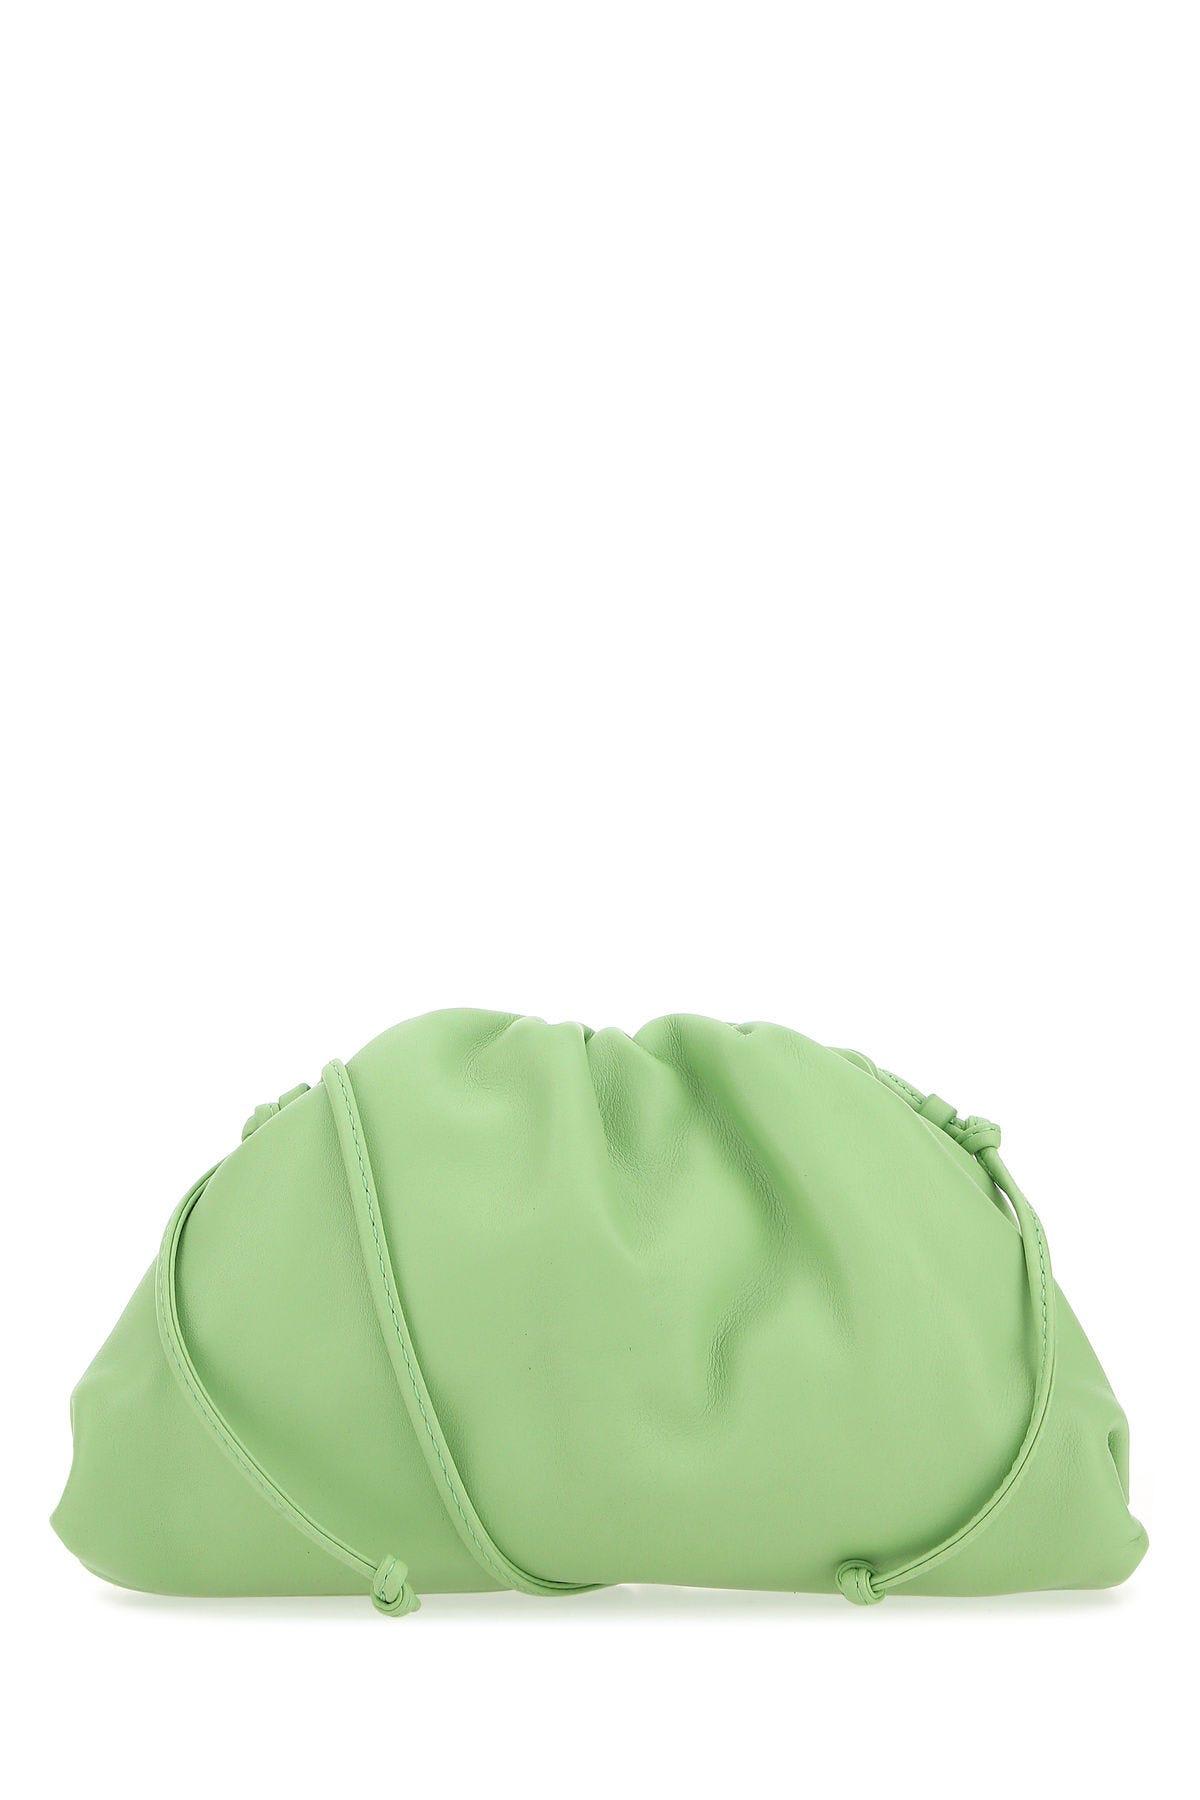 Bottega Veneta Pastel Green Nappa Leather Mini Pouch Clutch In